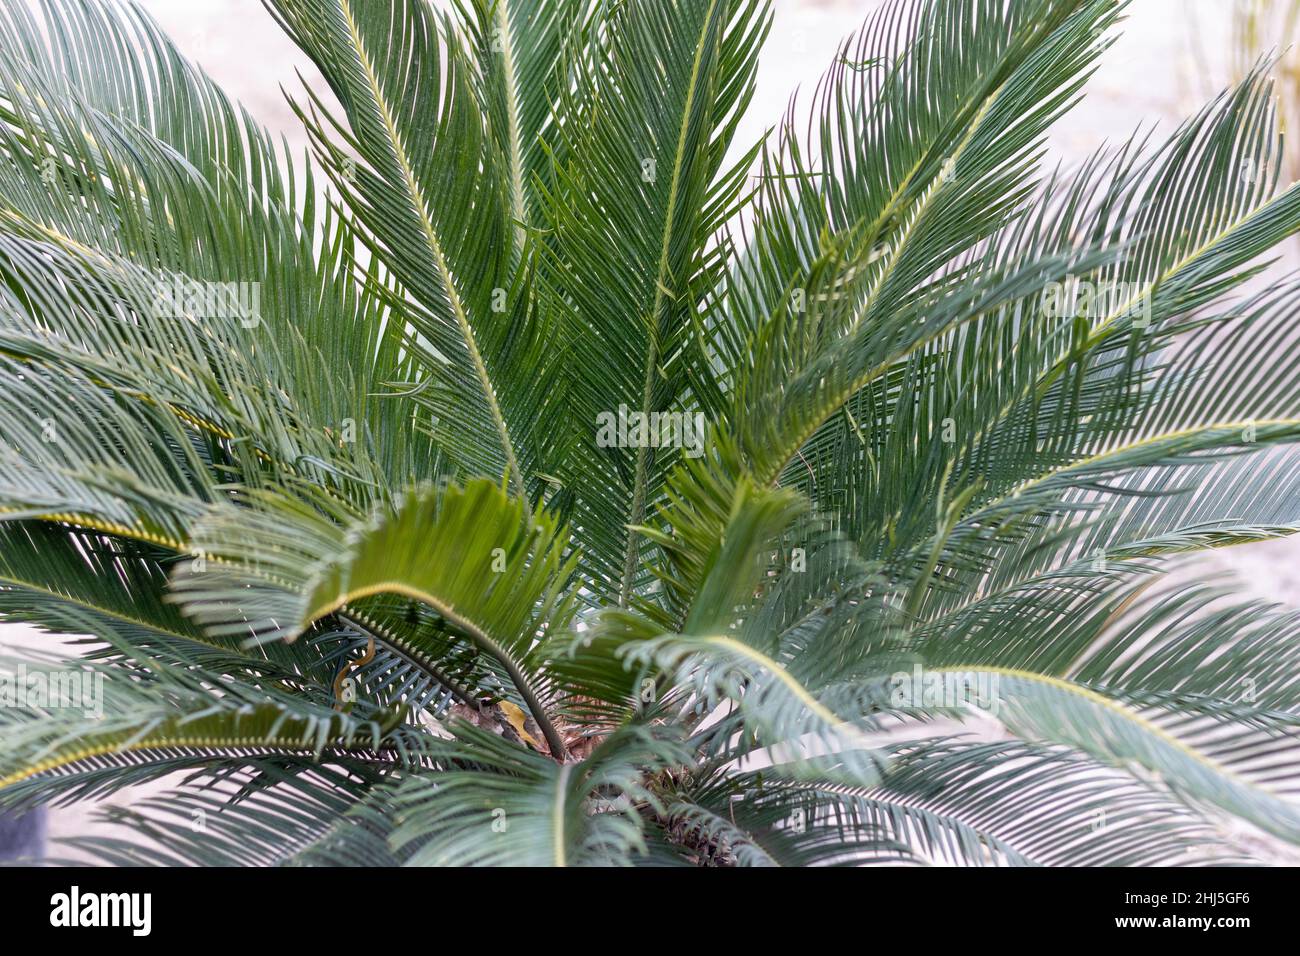 Sago palm tree closeup view Stock Photo